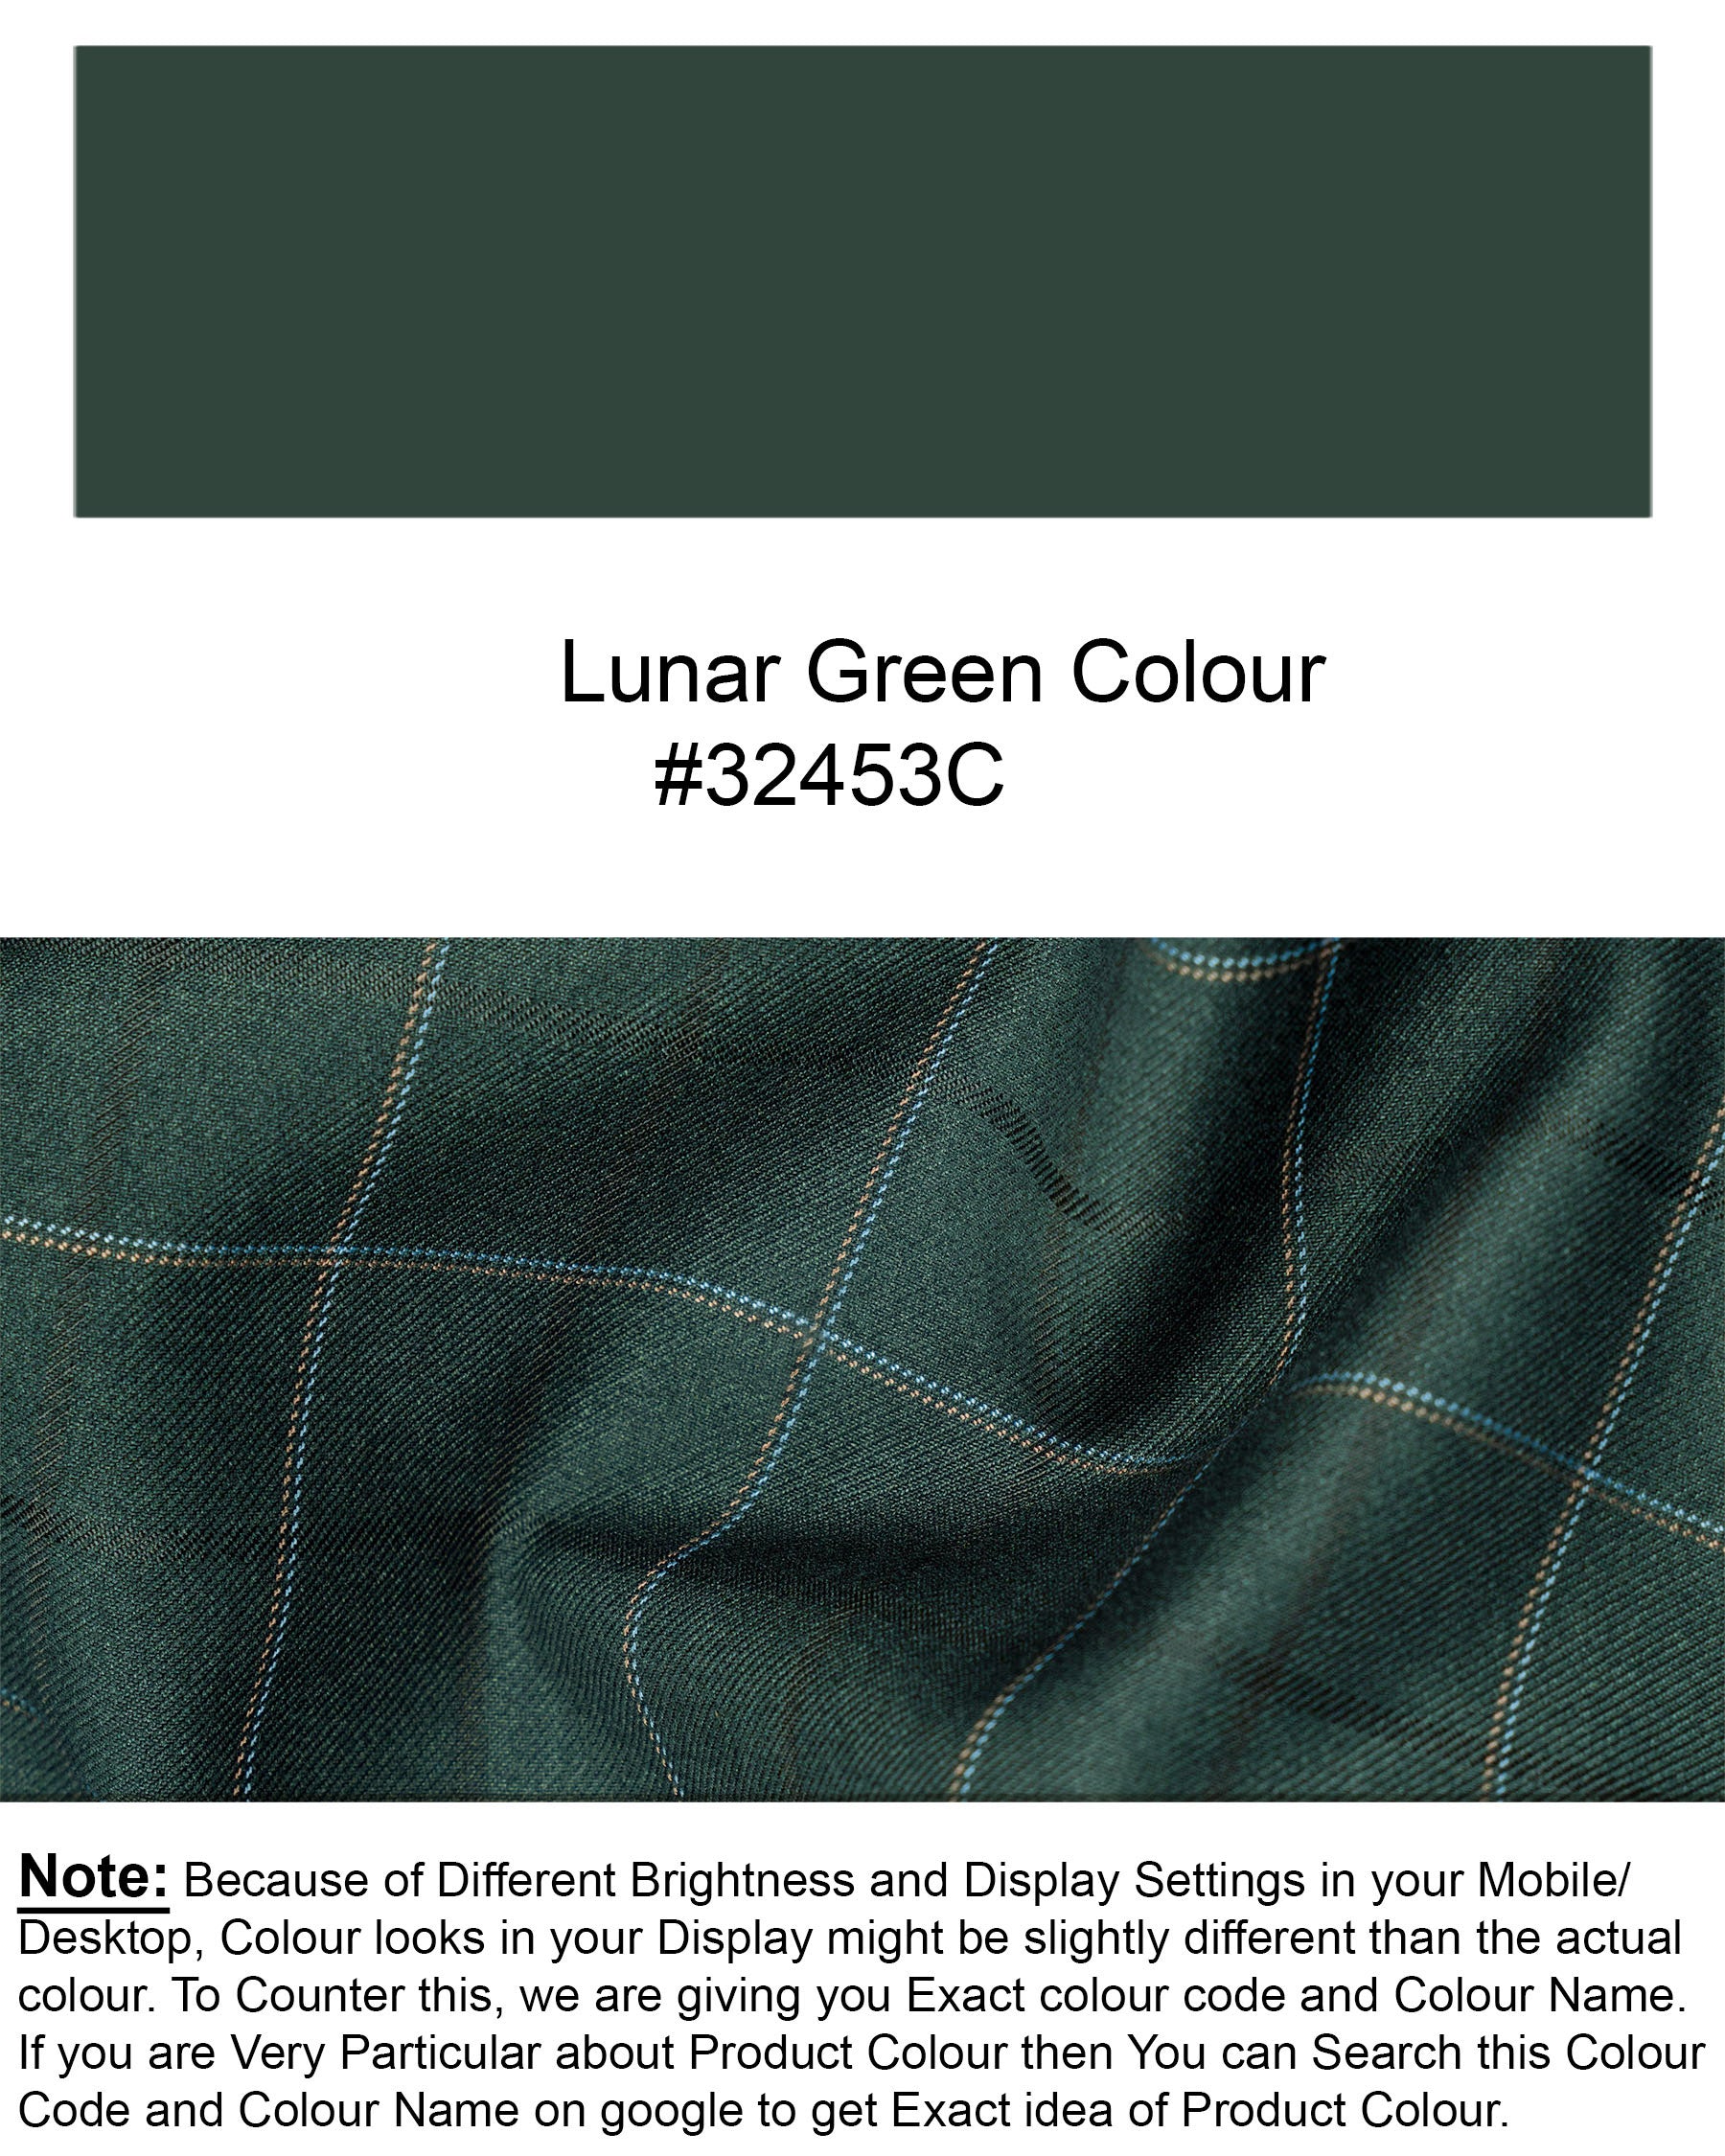 Lunar Green Super fine windowpane Double Breasted Woolrich Suit